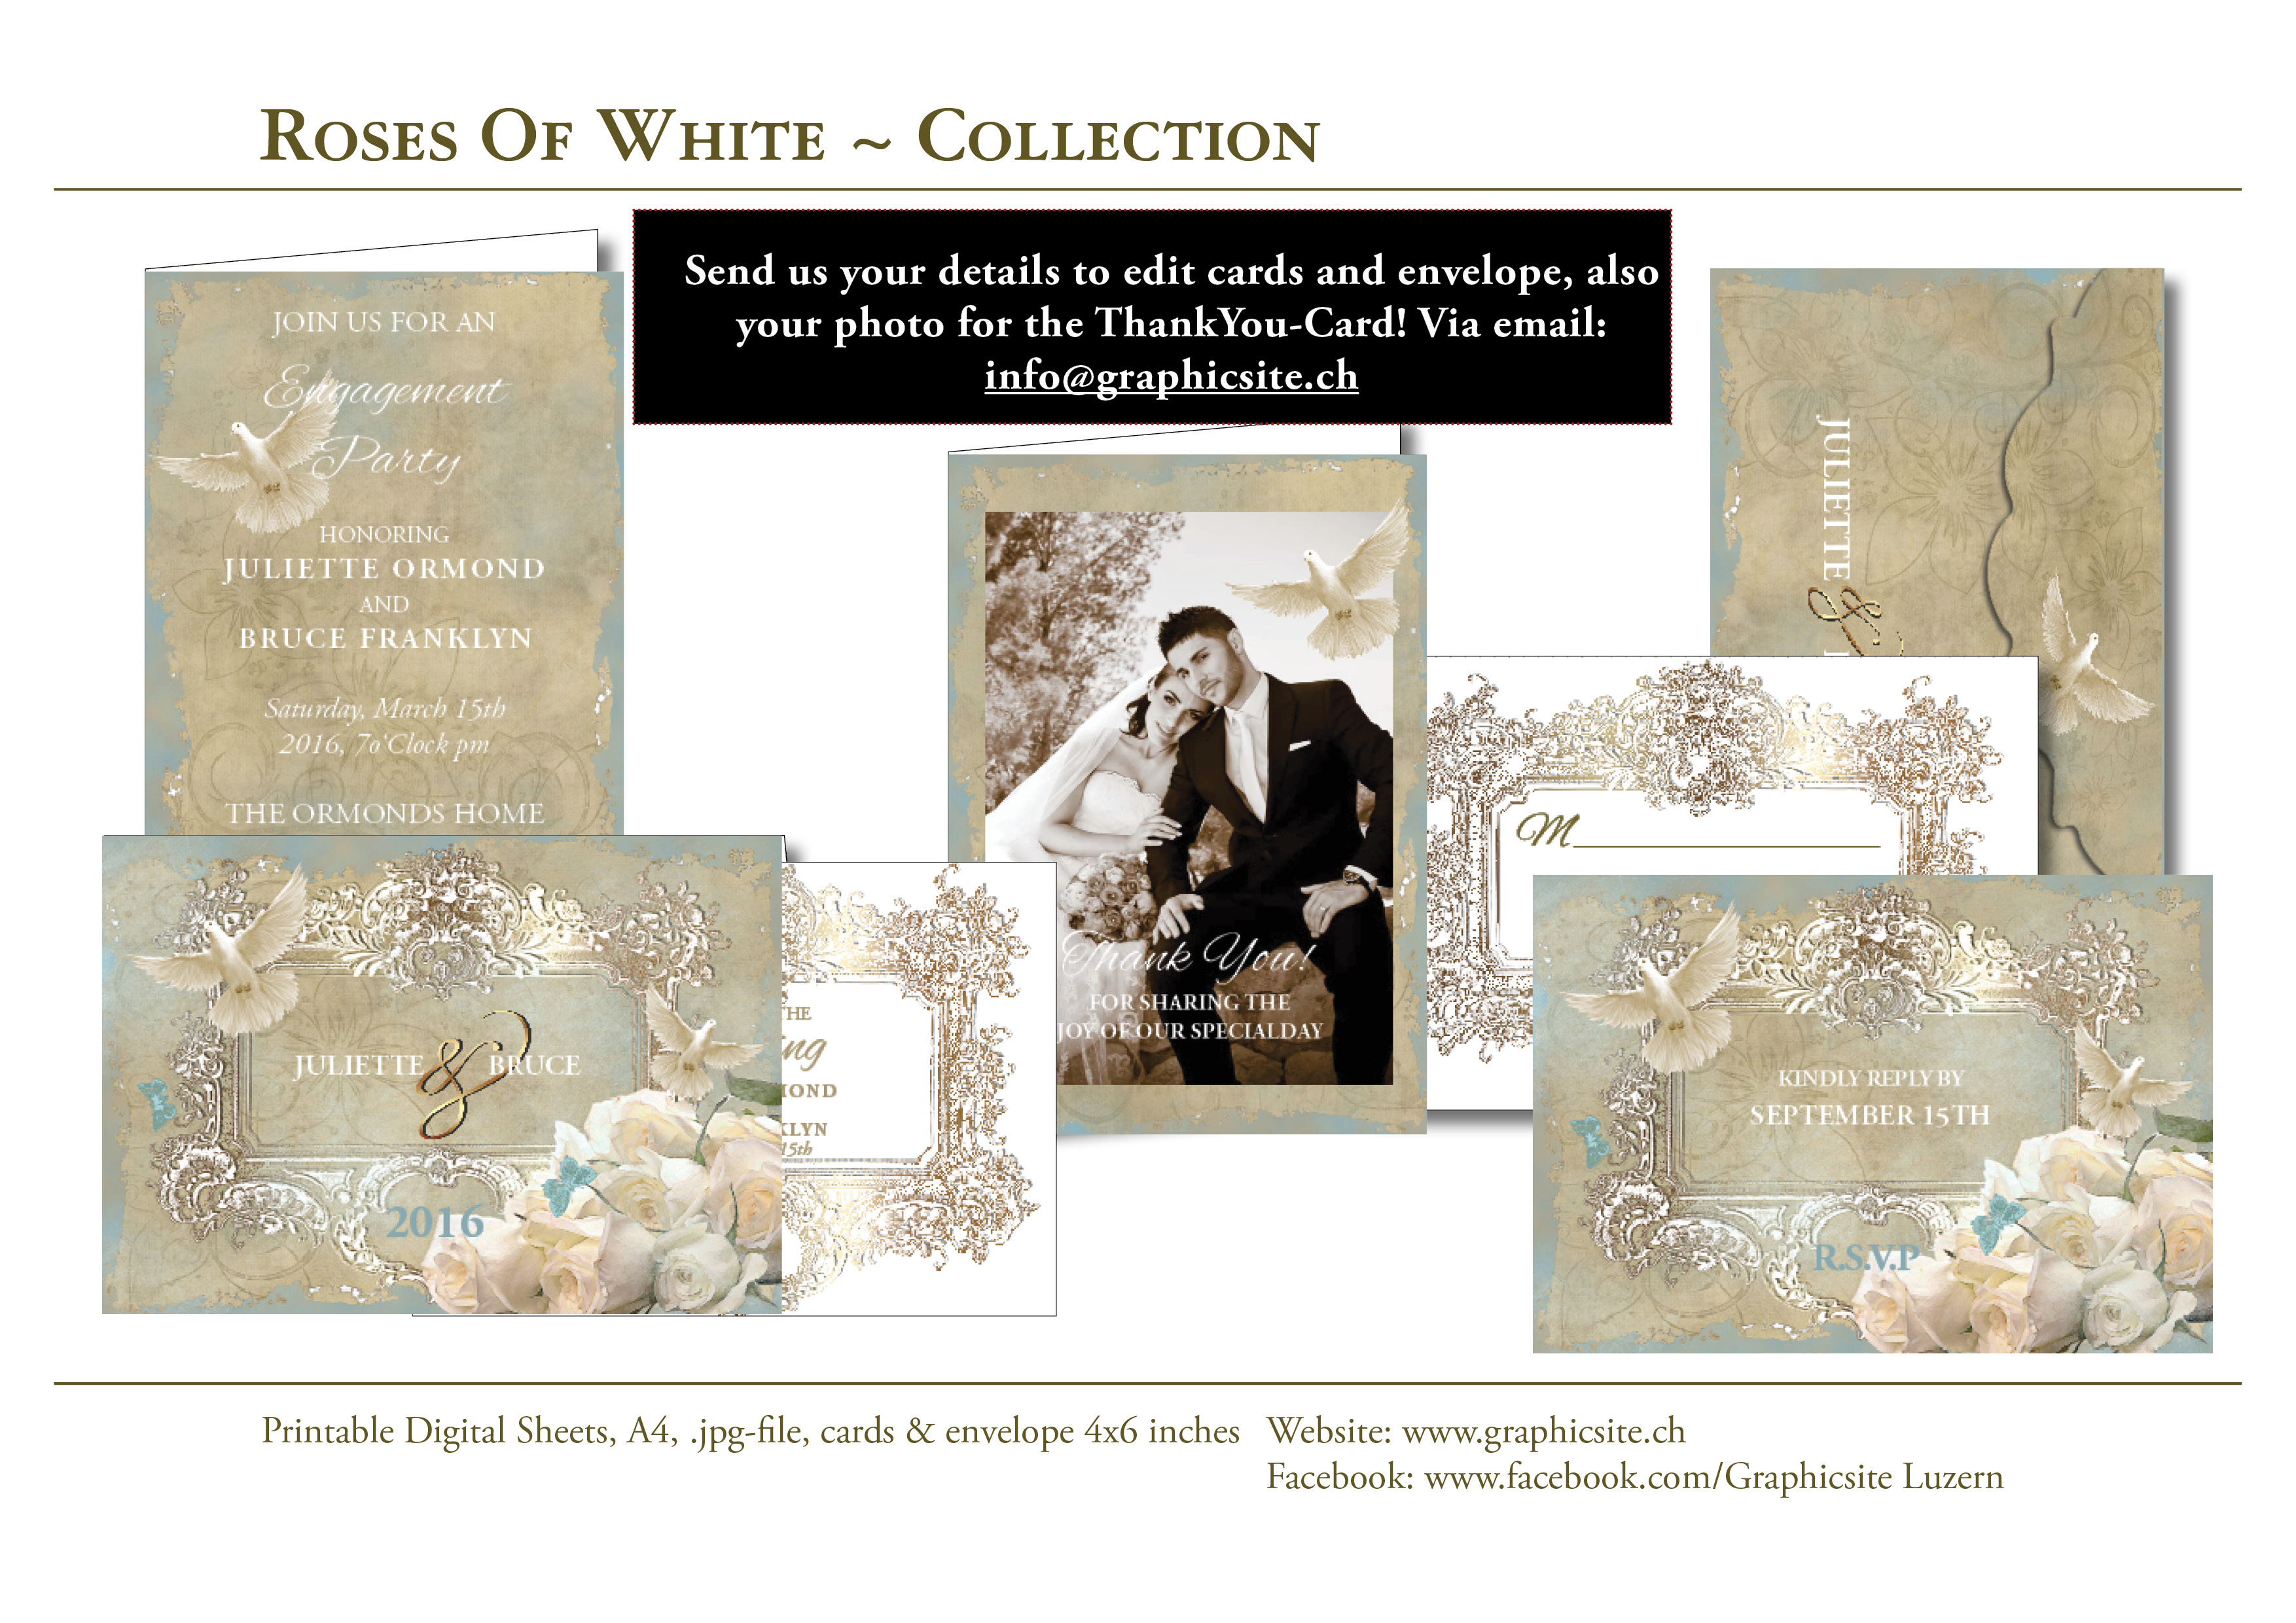 RosesOfWhite - Printable Digital Sheets - Wedding Cards - 6x4 images